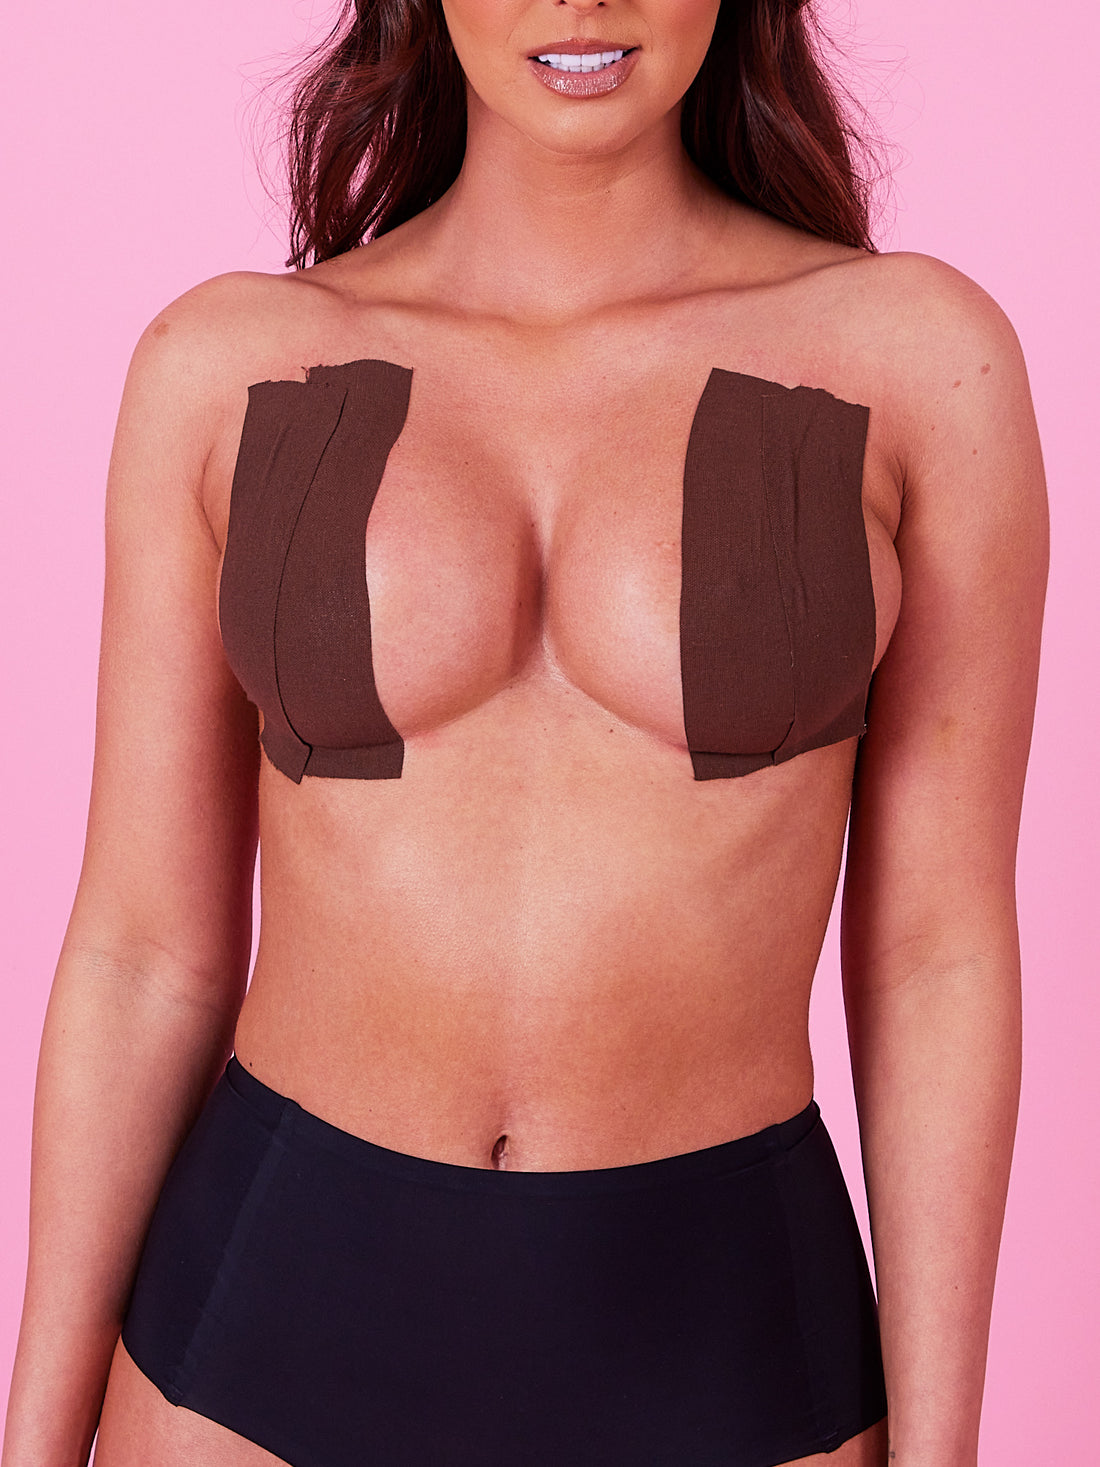 Piftif Boob Tape Breast Lift Tape for Contour Lift & Fashion